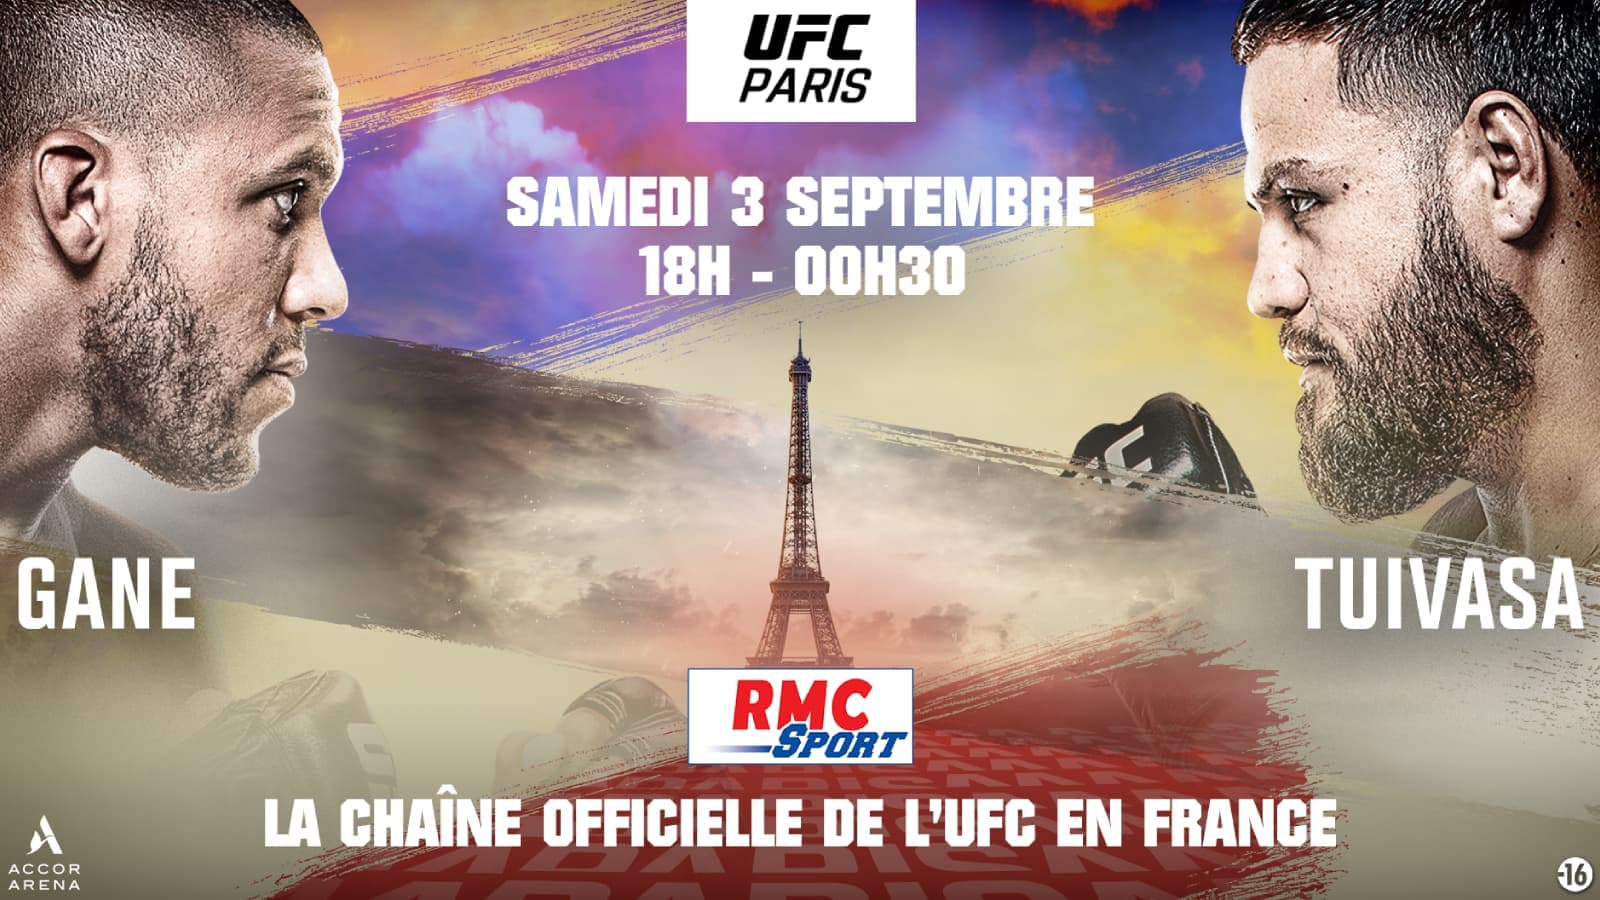 LIVE – UFC Paris: Si sale per qualche ora da Gane-Tuivasa